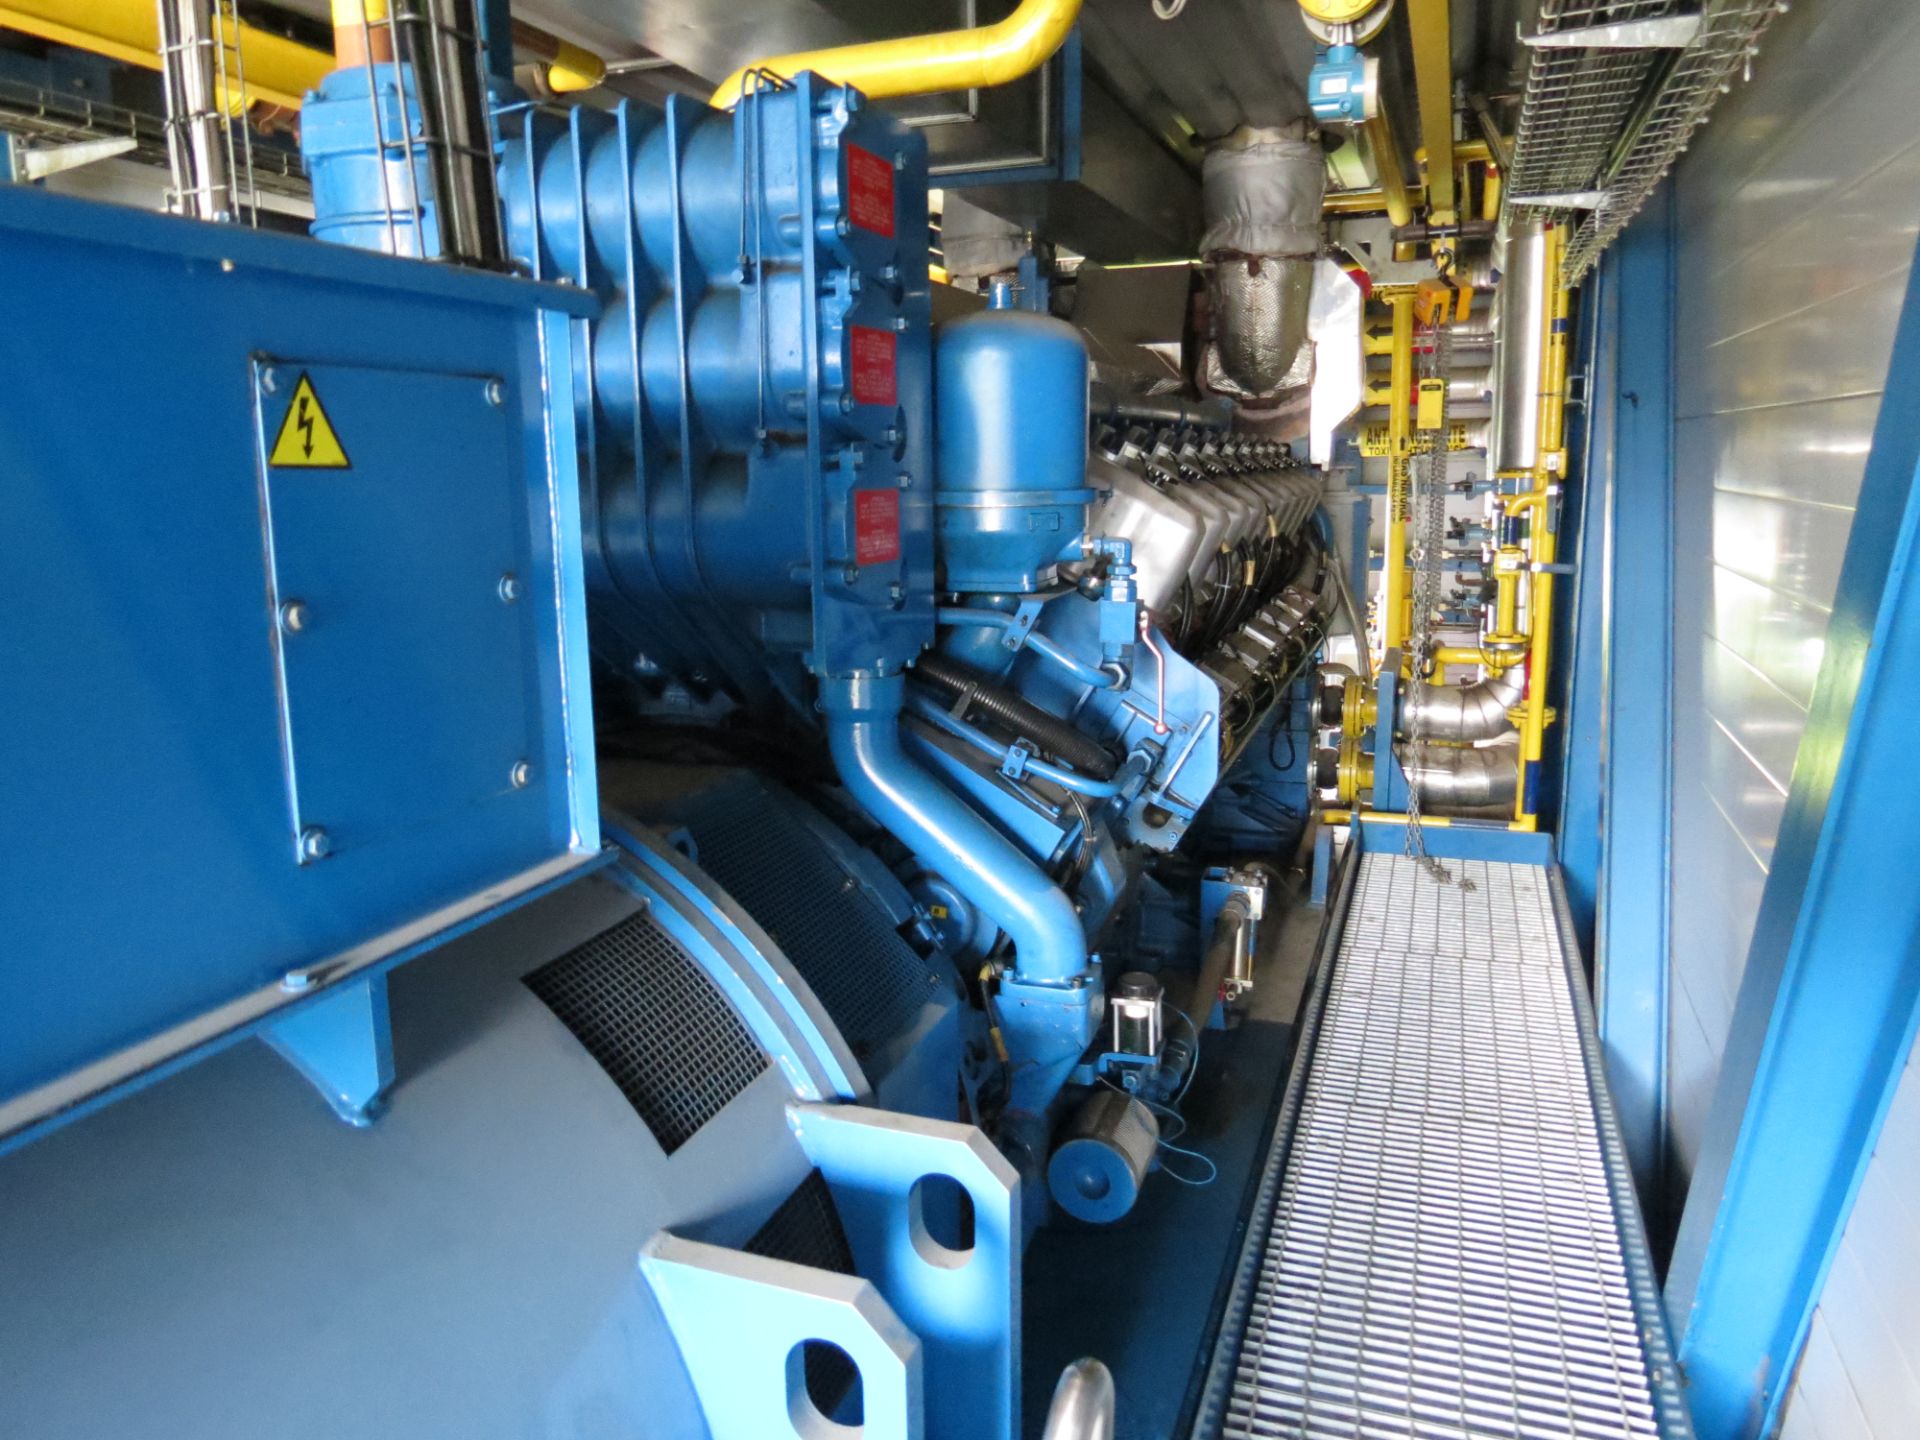 2001 Leroy Somer Emergency plant 18-cylinder Generator model LSA 56 L6-6P of 2840 KW/ 3550KVA - Image 14 of 73